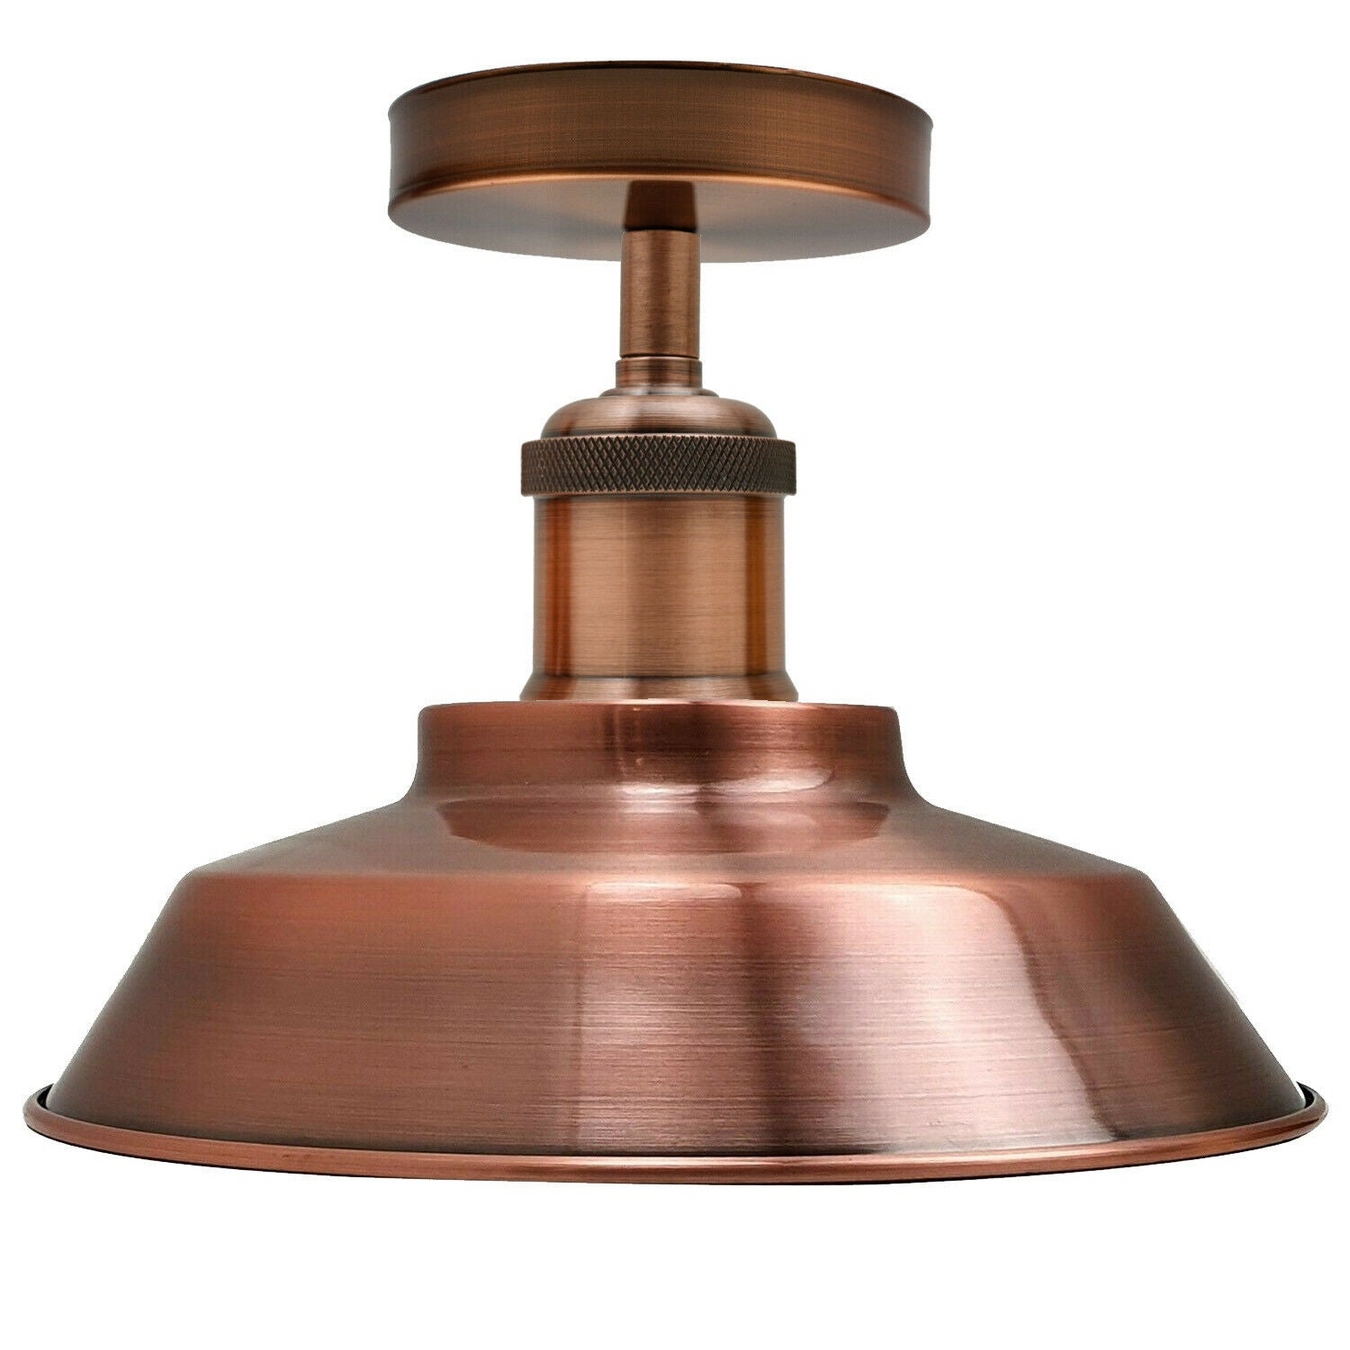 Brushed Copper Ceiling Light